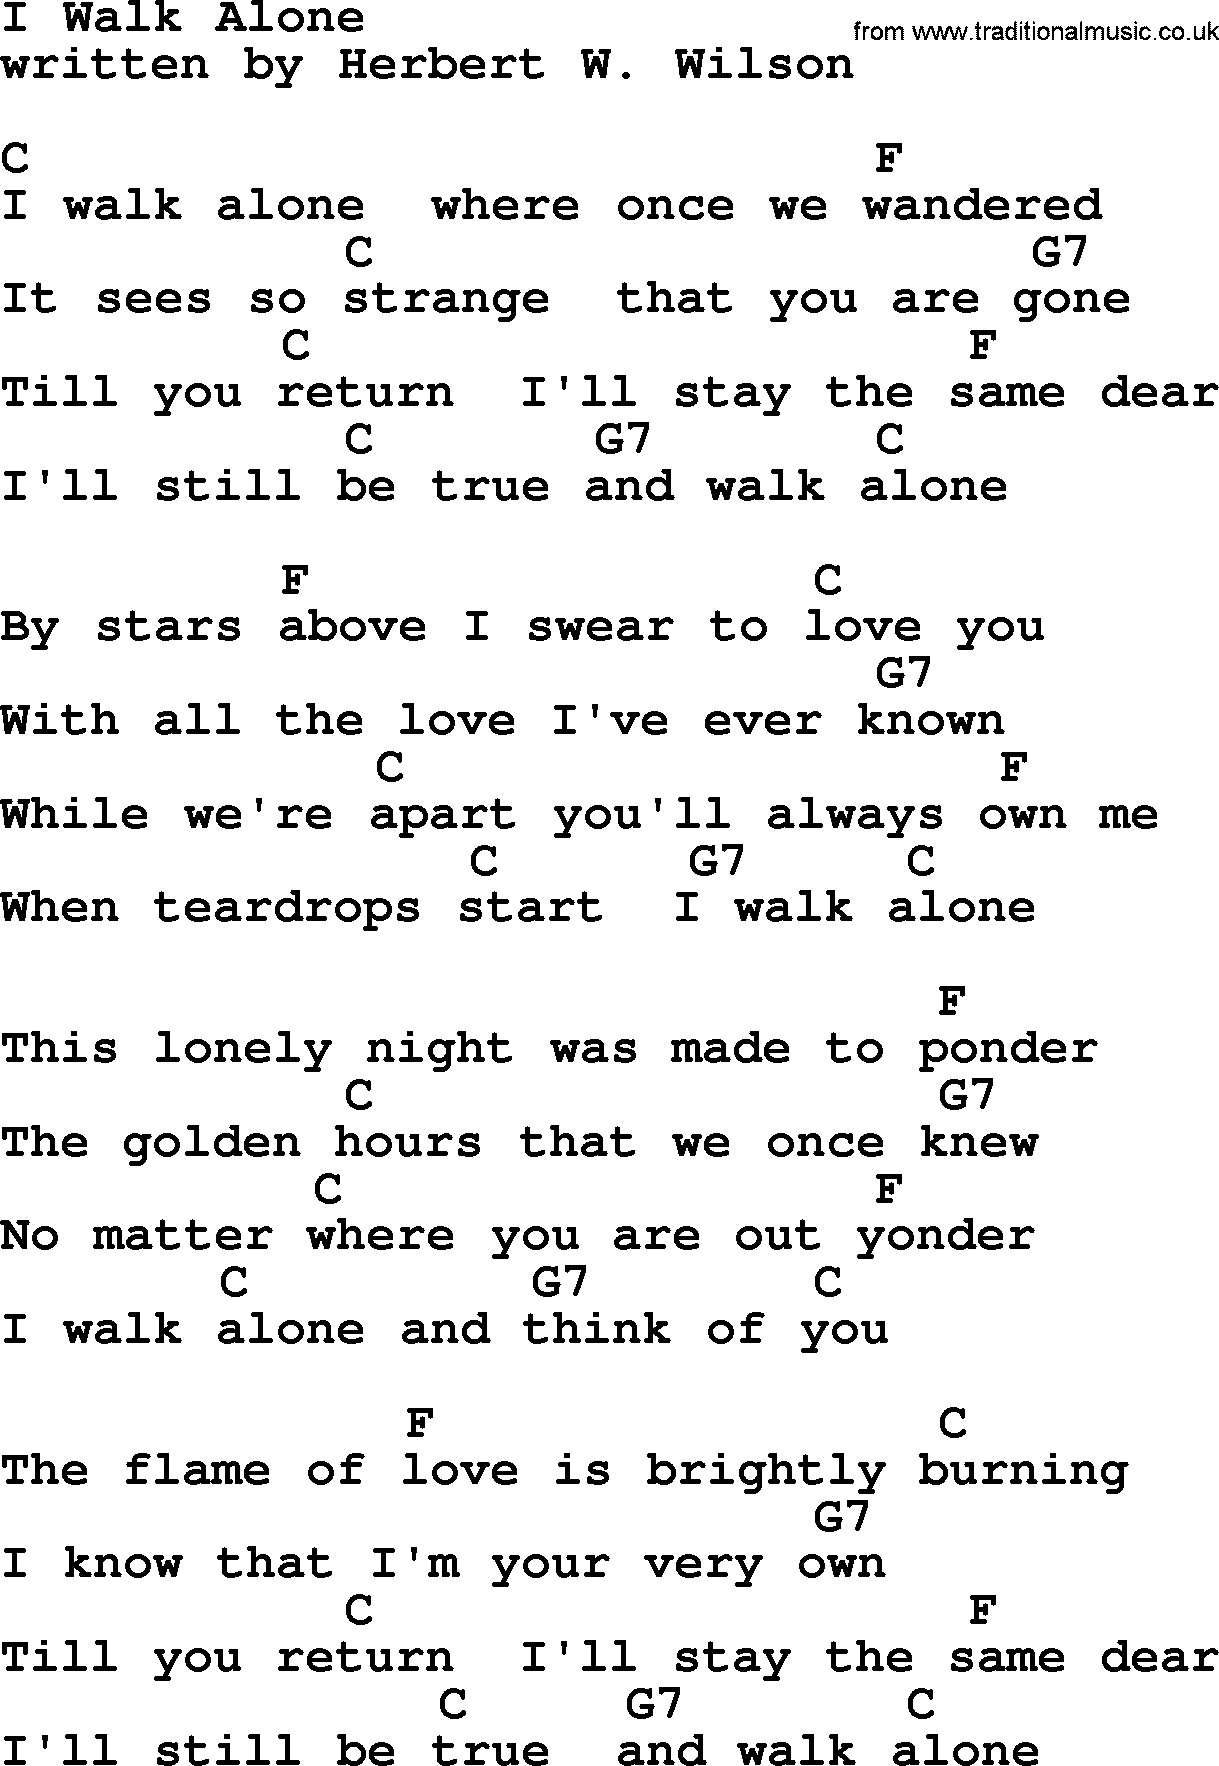 Marty Robbins song: I Walk Alone, lyrics and chords